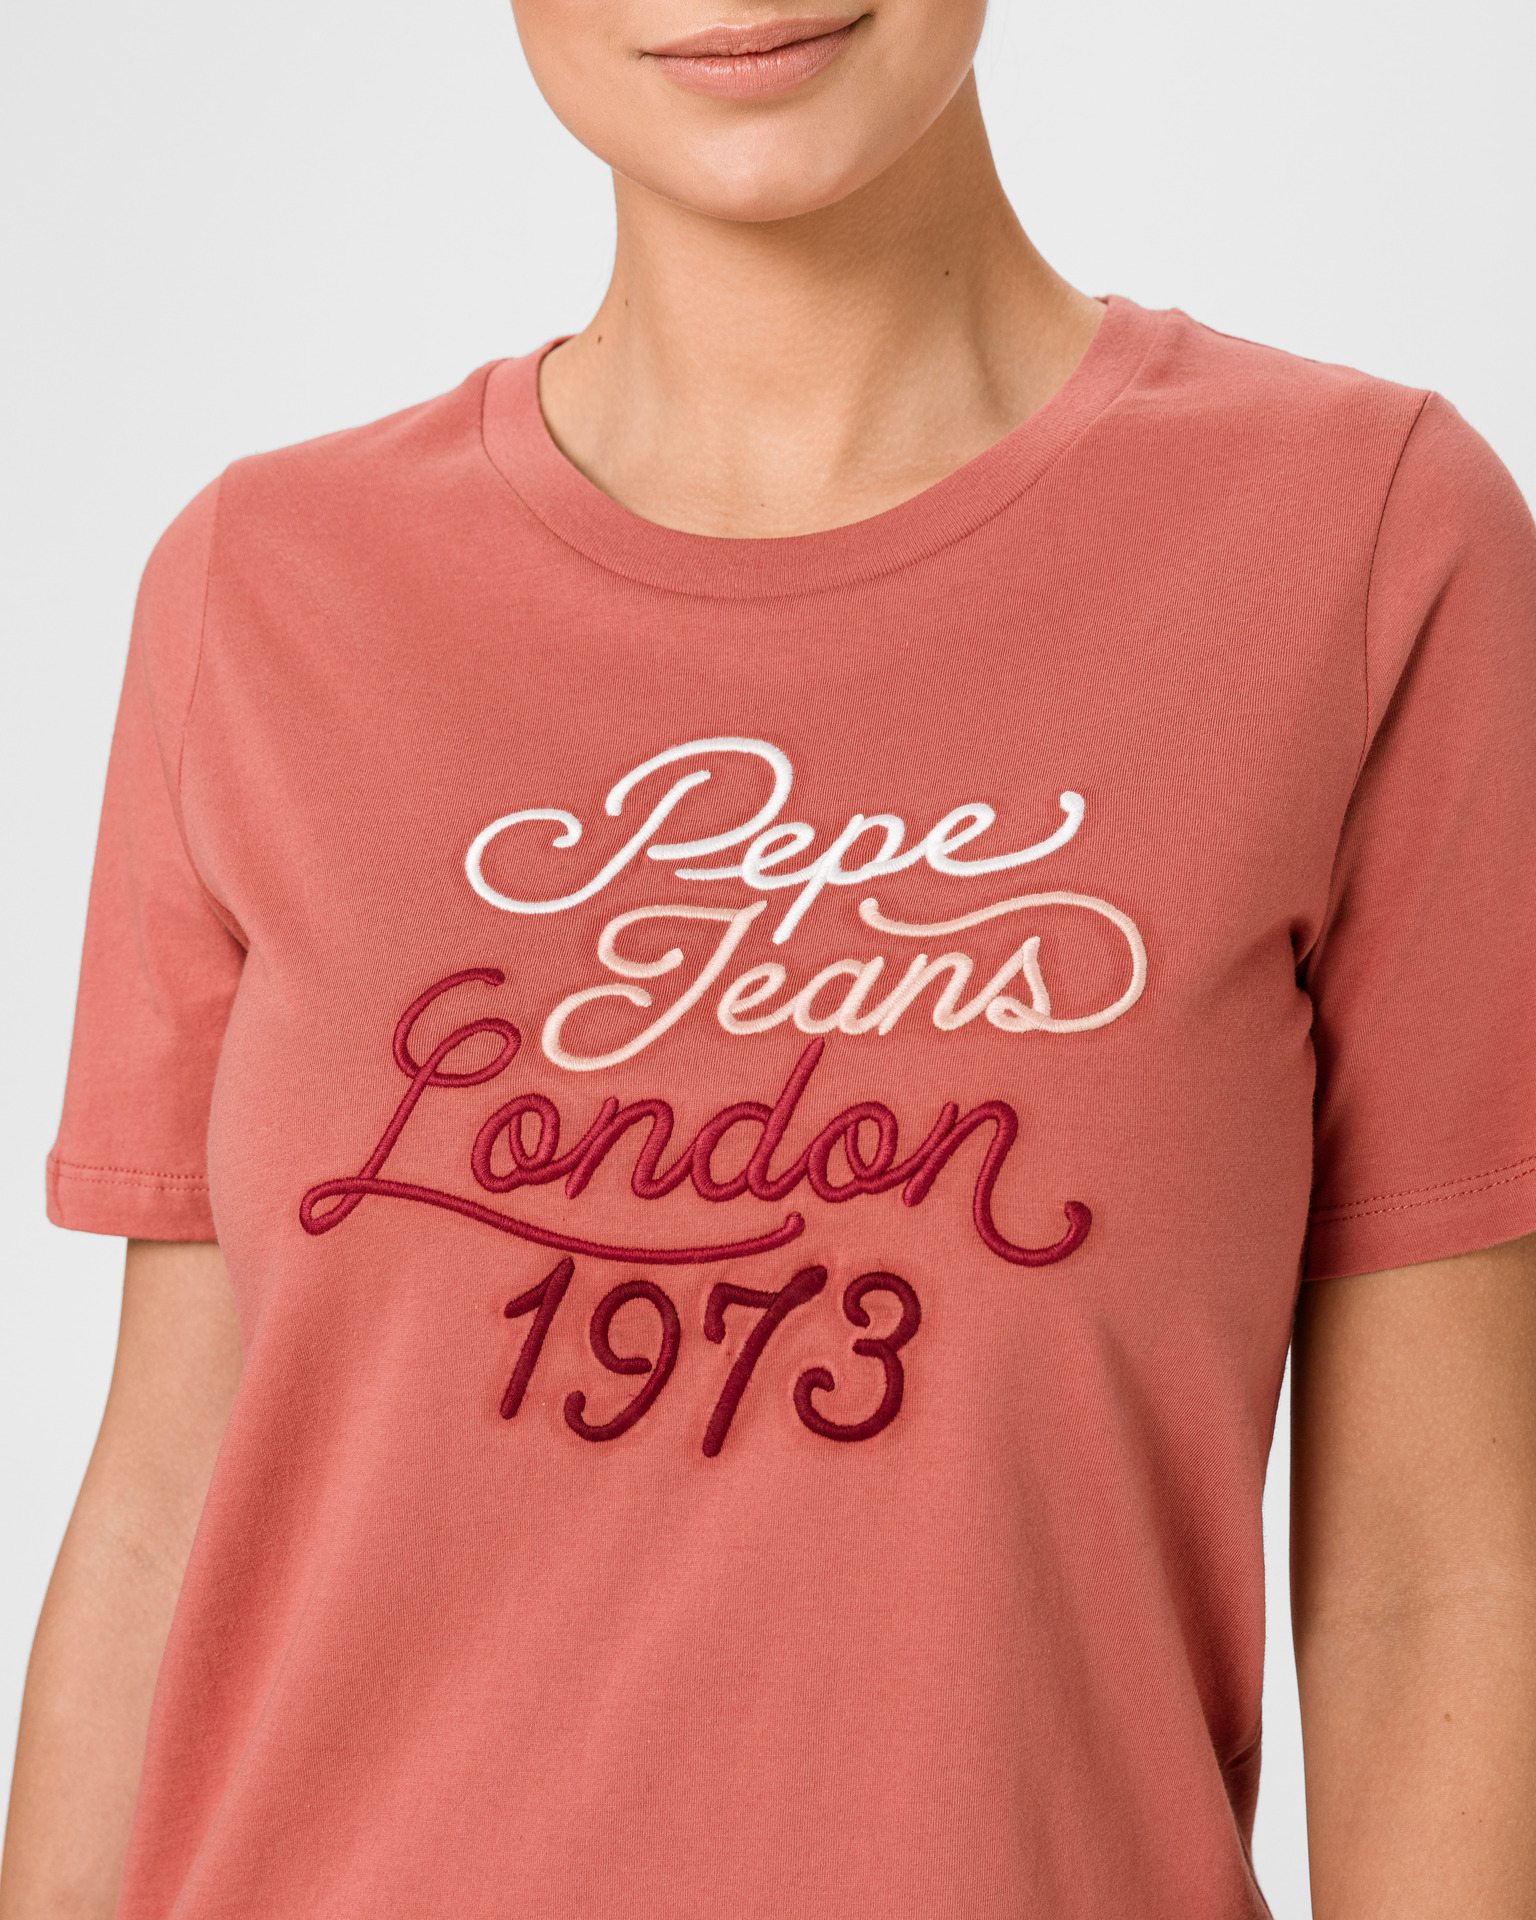 Pepe Jeans Lola T-Shirt Fille 